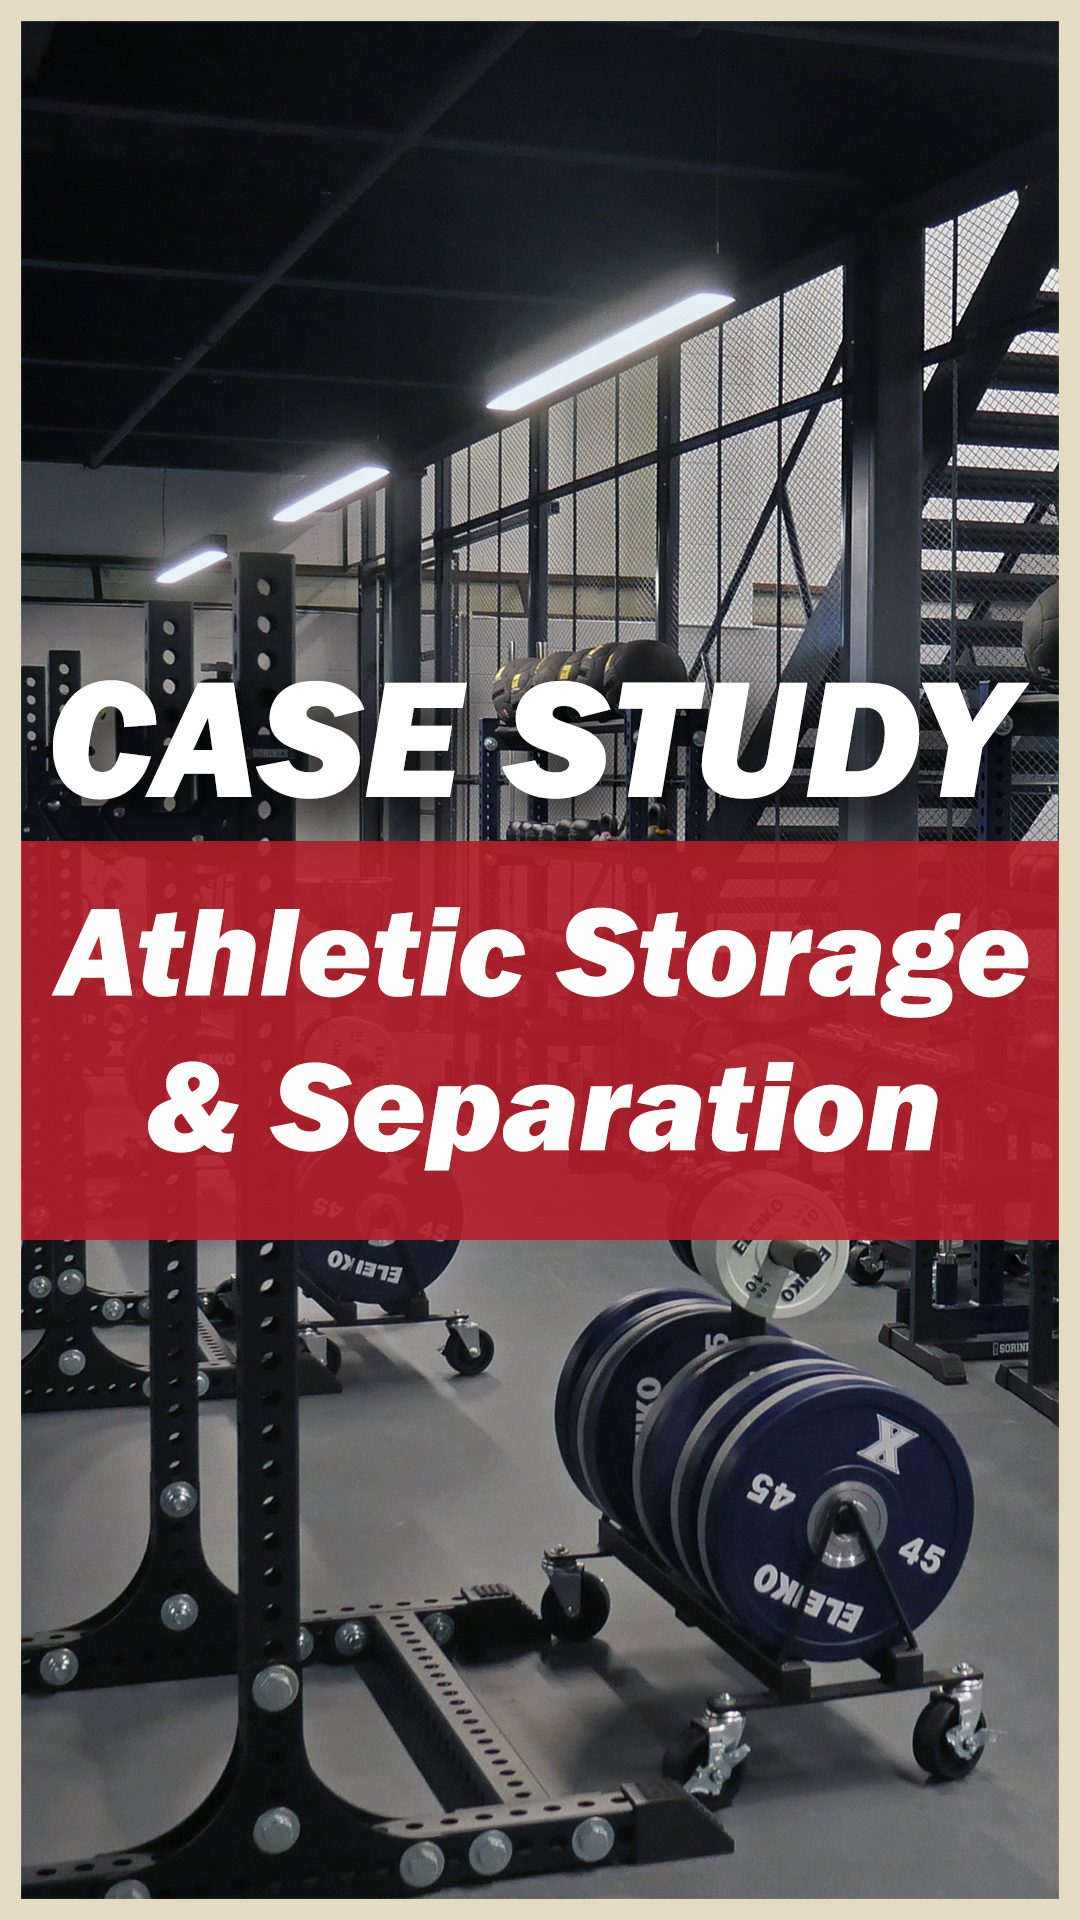 Xavier-University-Athletic-Storage-Cage-Case-Study-Thumbnail